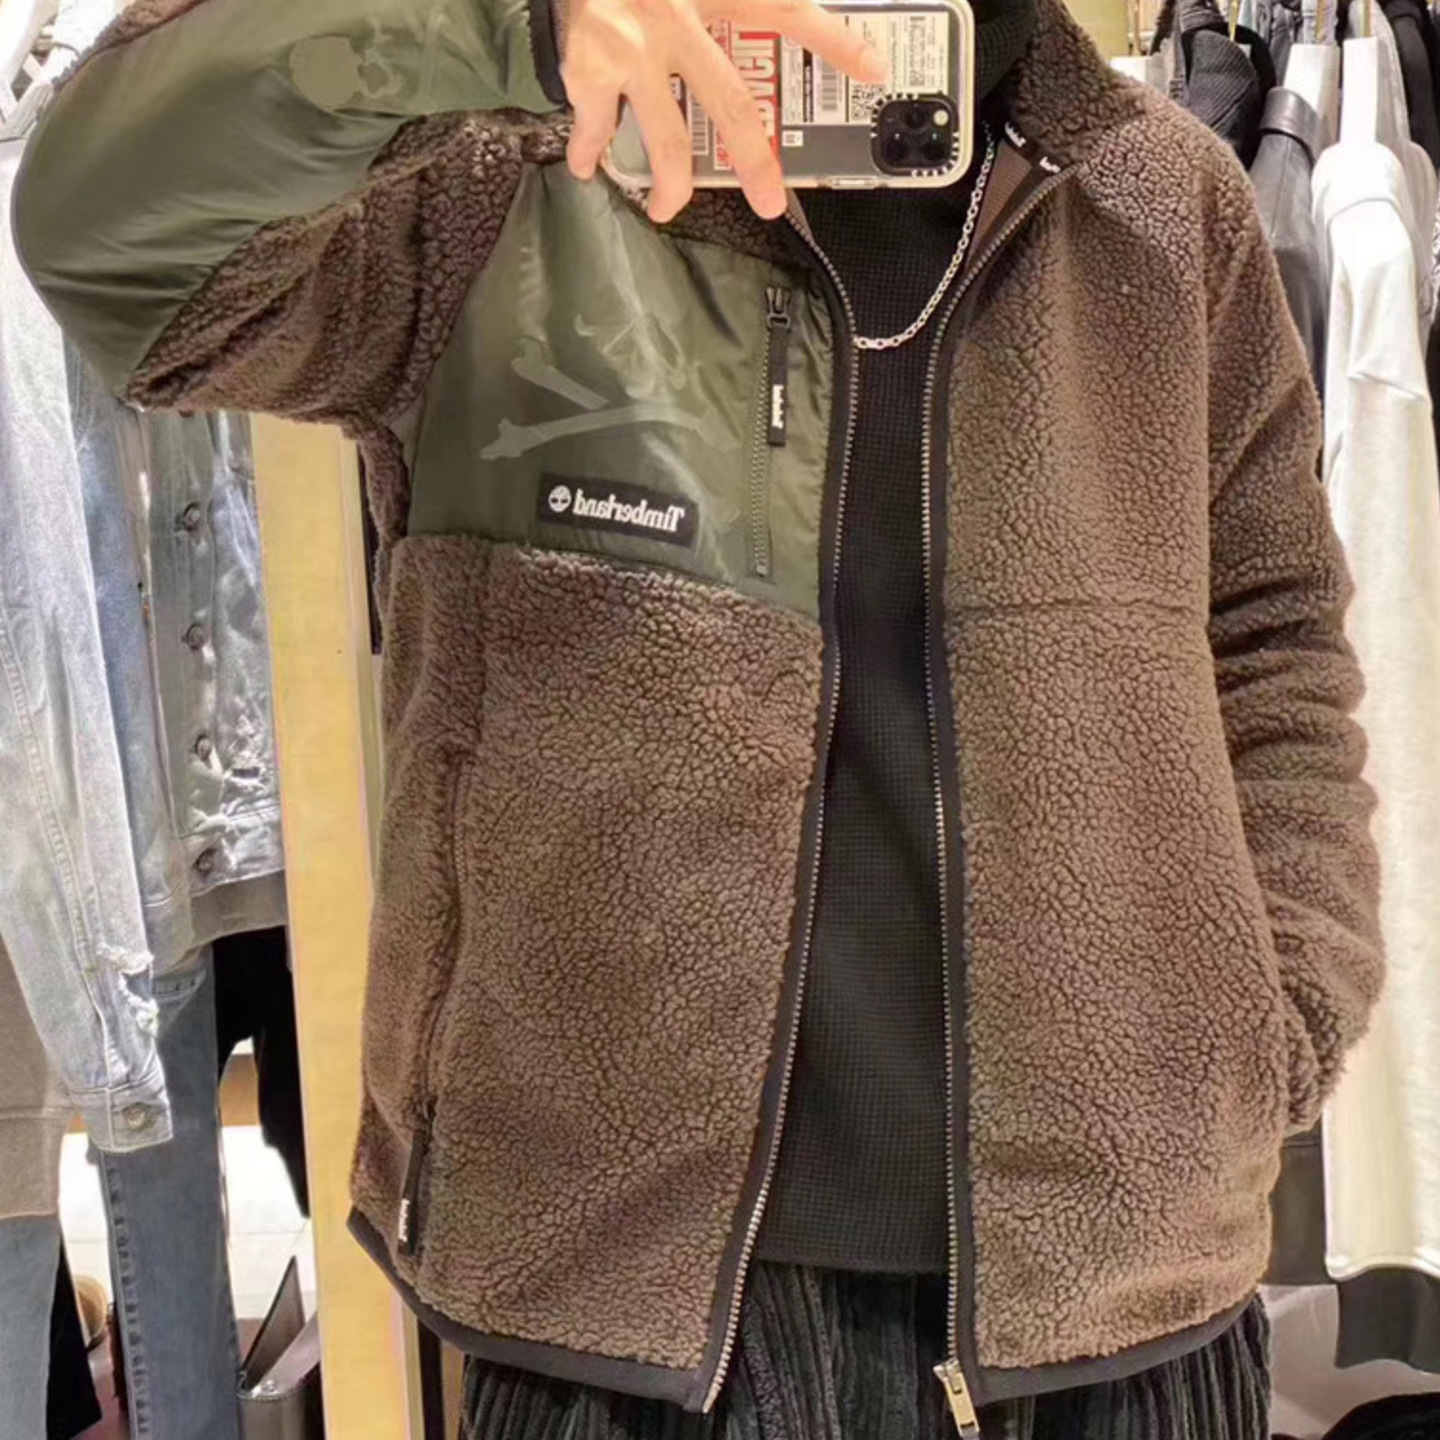 Timberland X mastermind Fleece Jacket